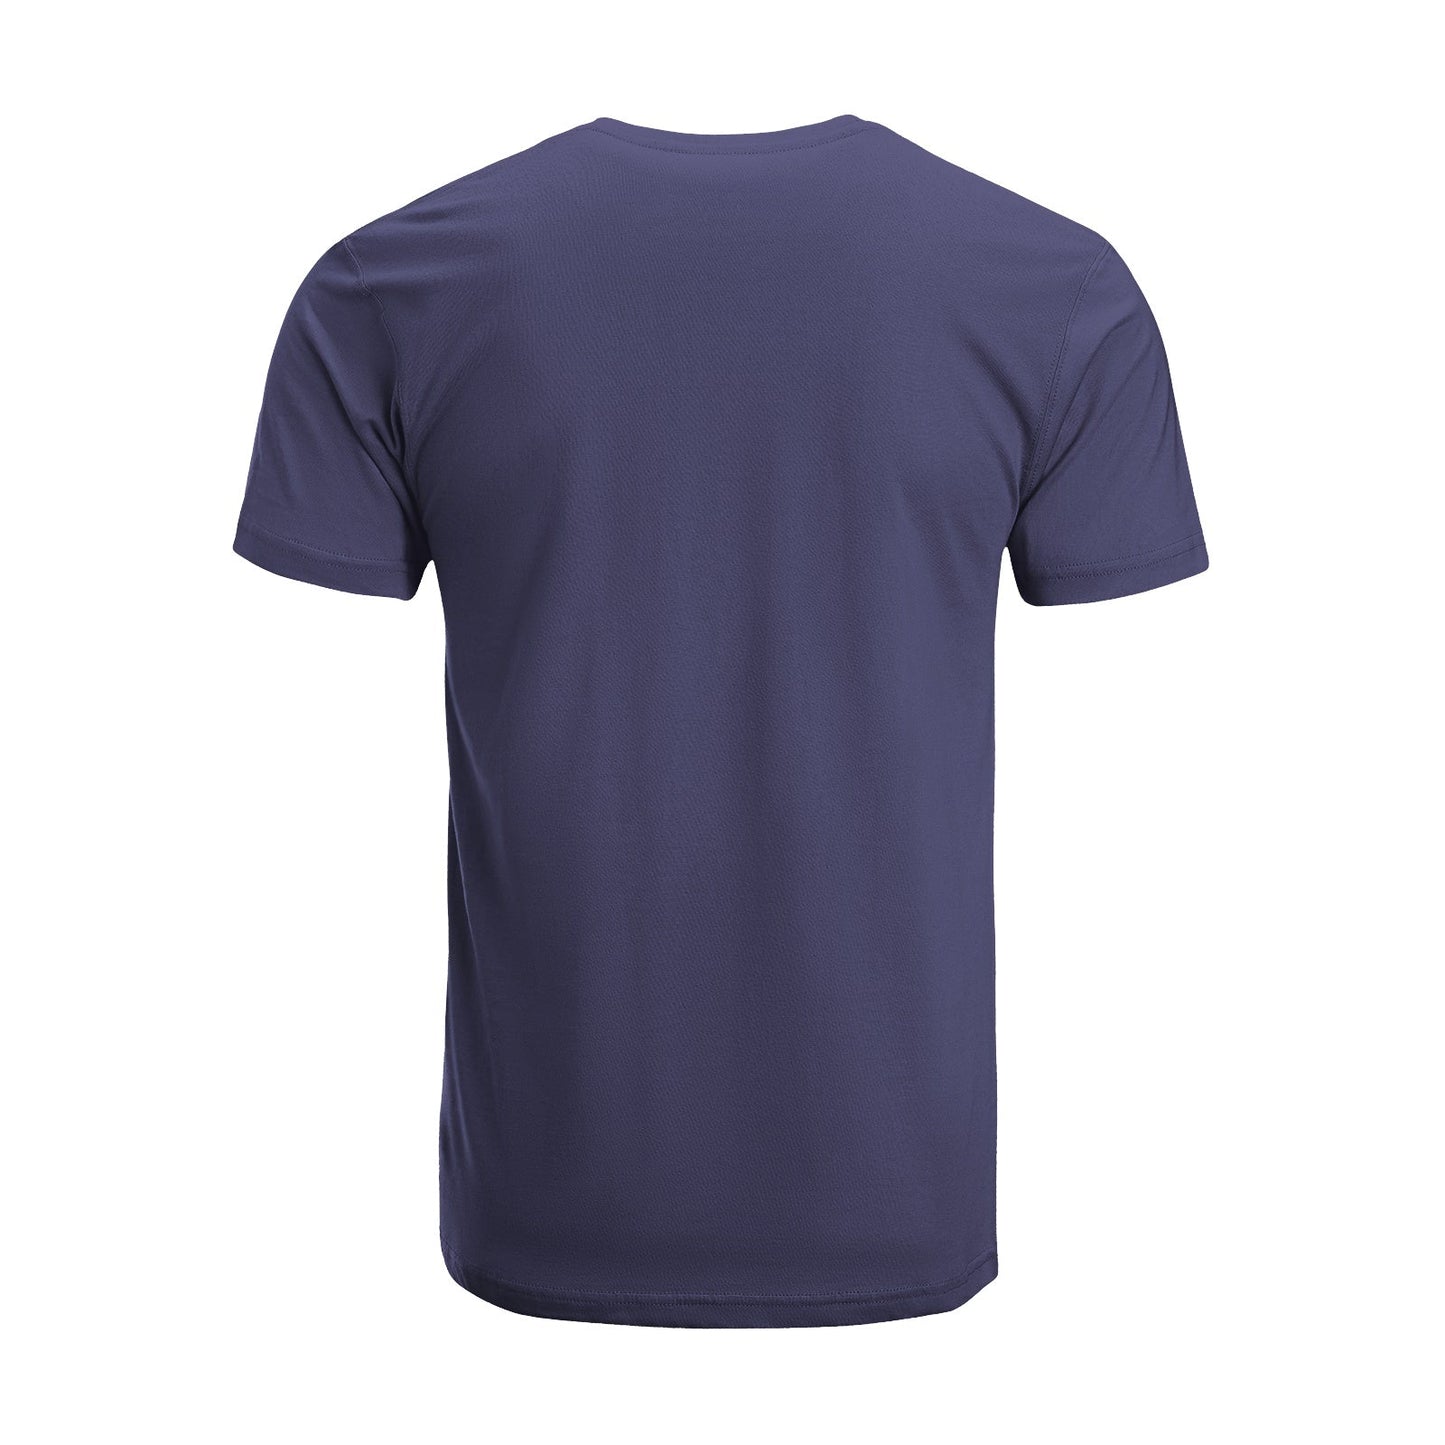 Unisex Short Sleeve Crew Neck Cotton Jersey T-Shirt DOG 10 - Tara-Outfits.com